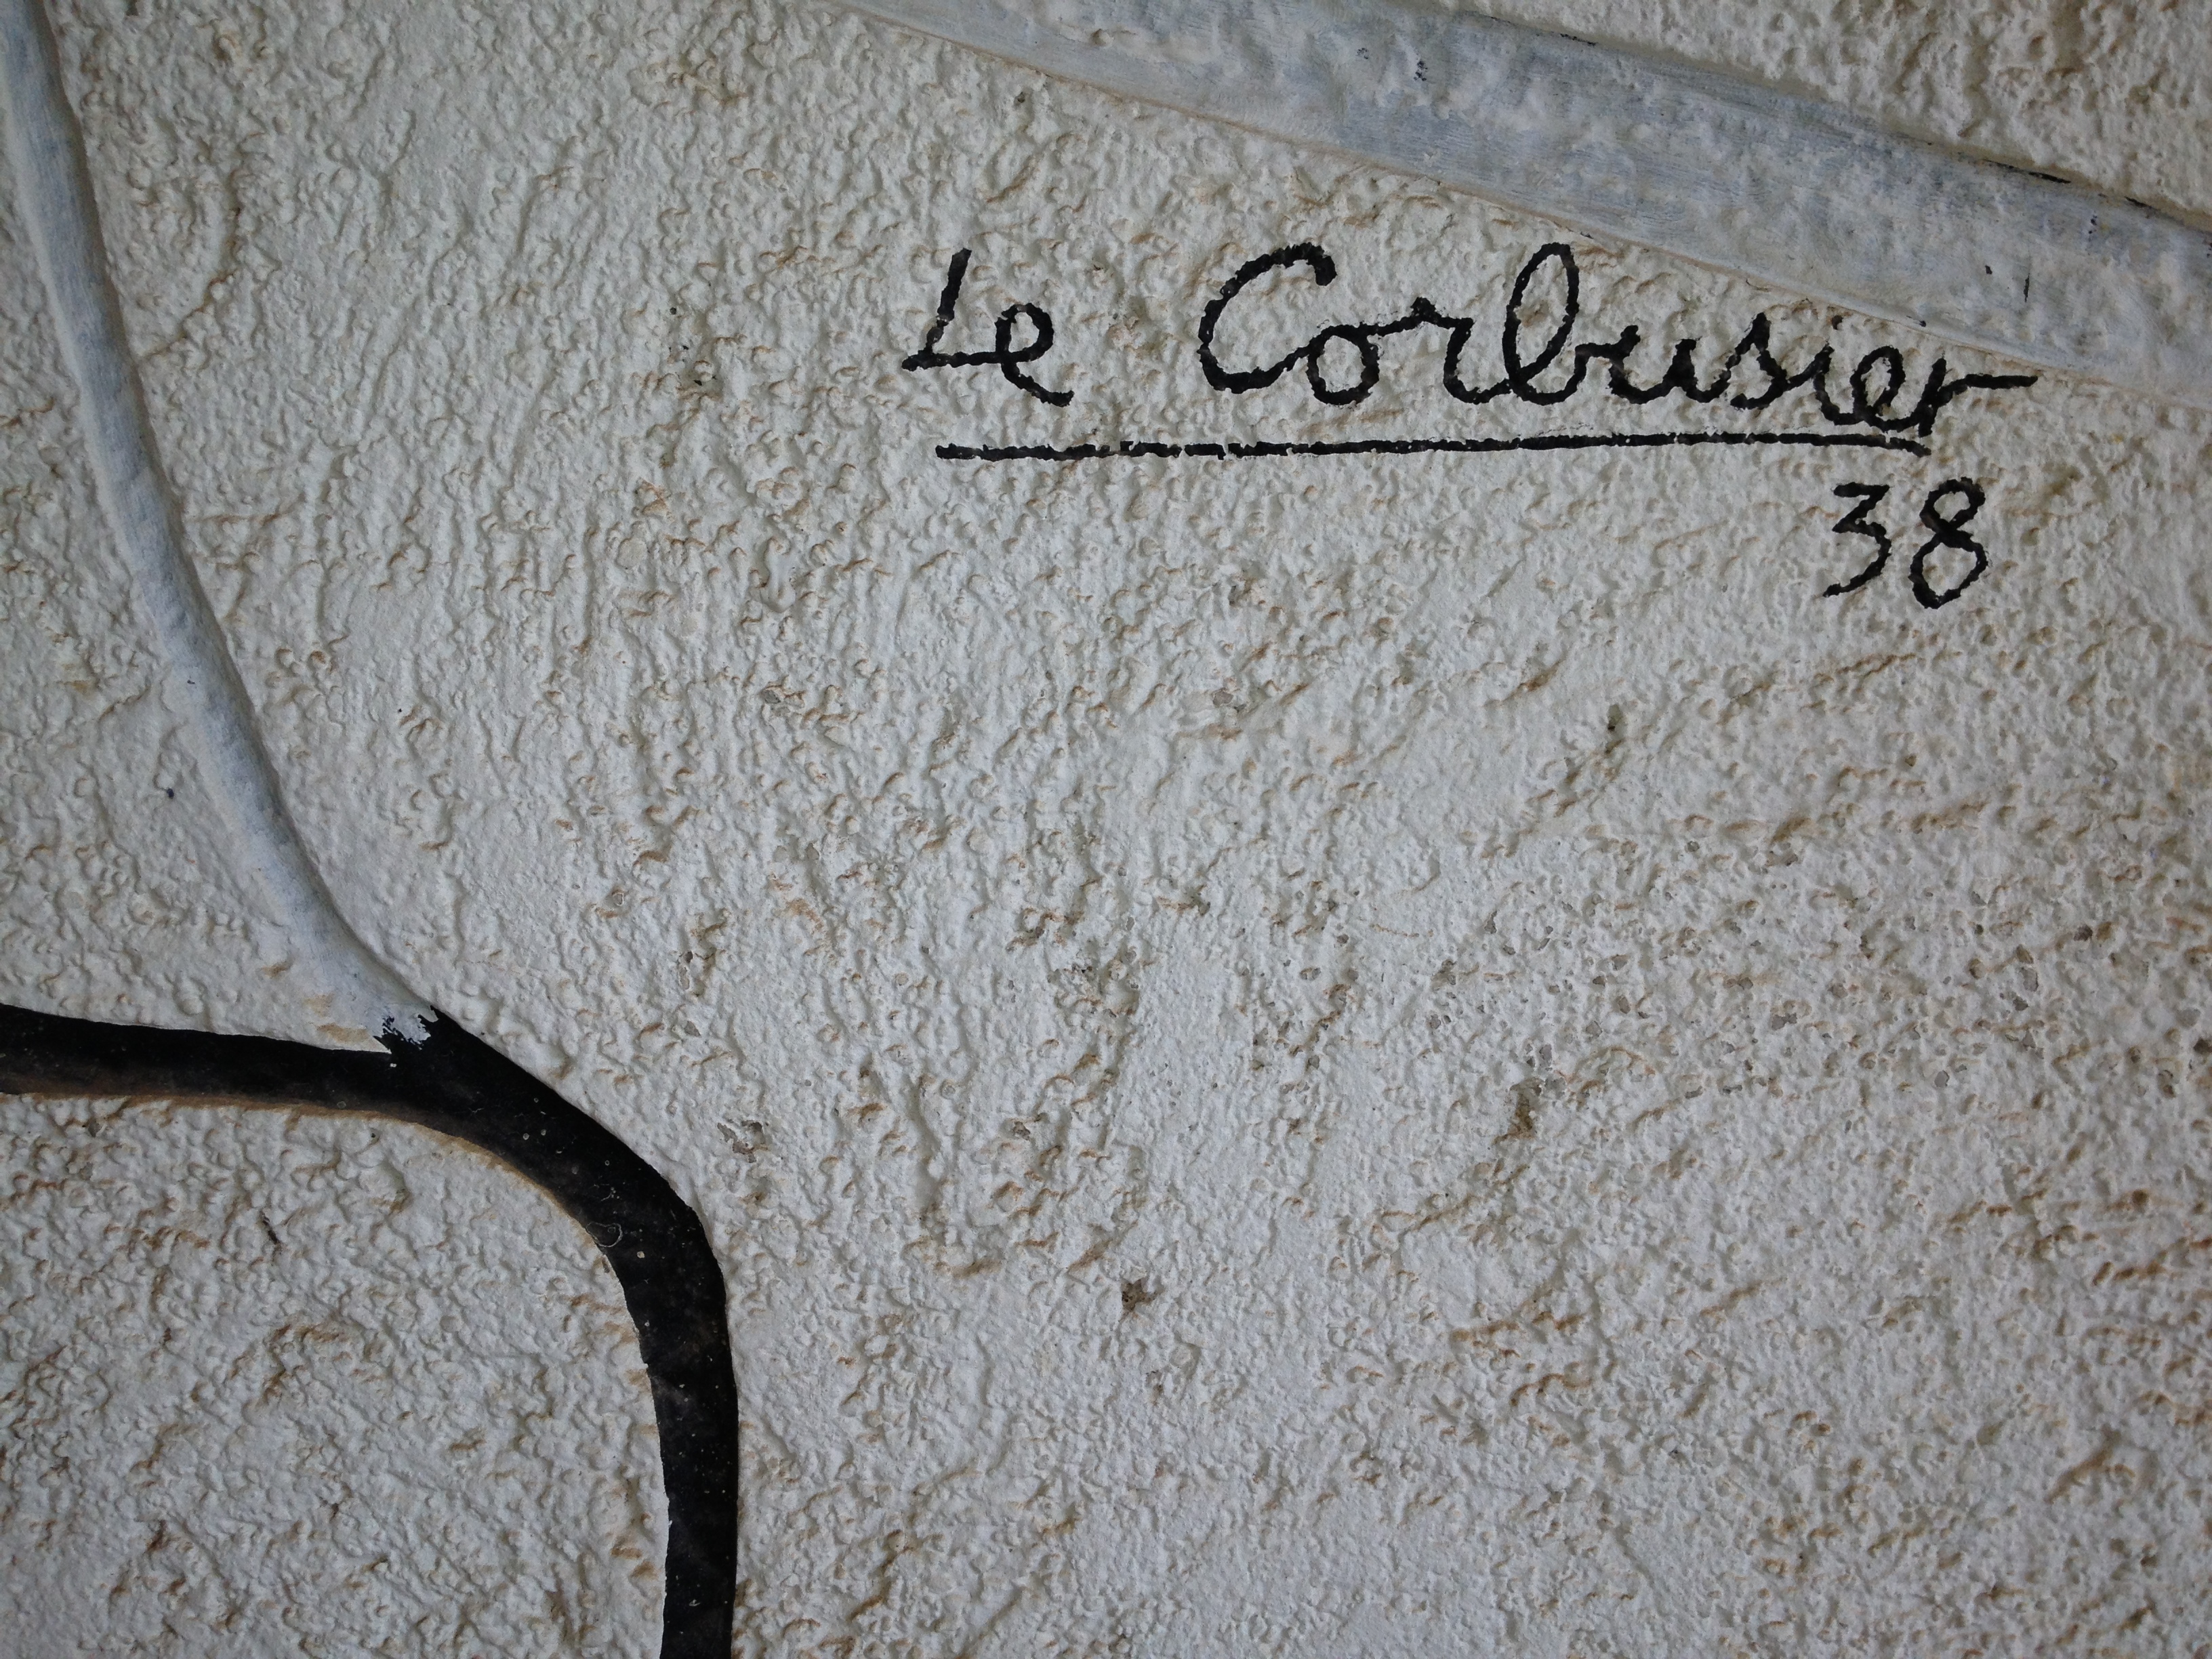 Le Corbusier mural on Eileen Gray's wall E1027 Cape Martin. 